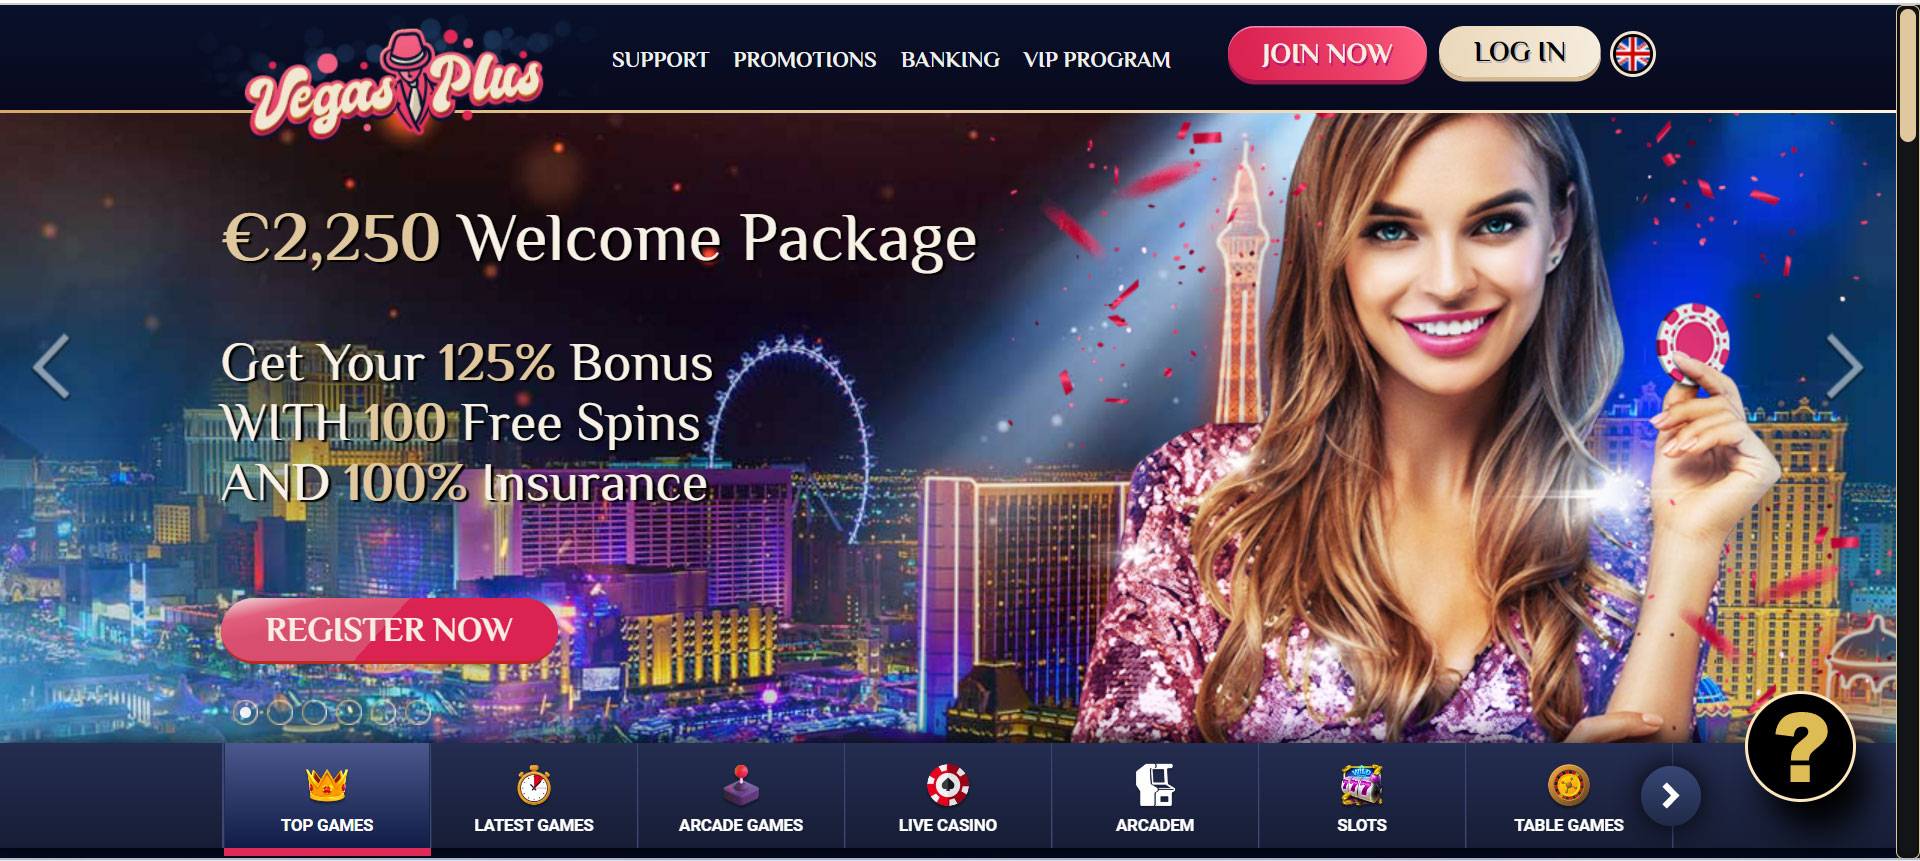 VegasPlus Casino Home Screen